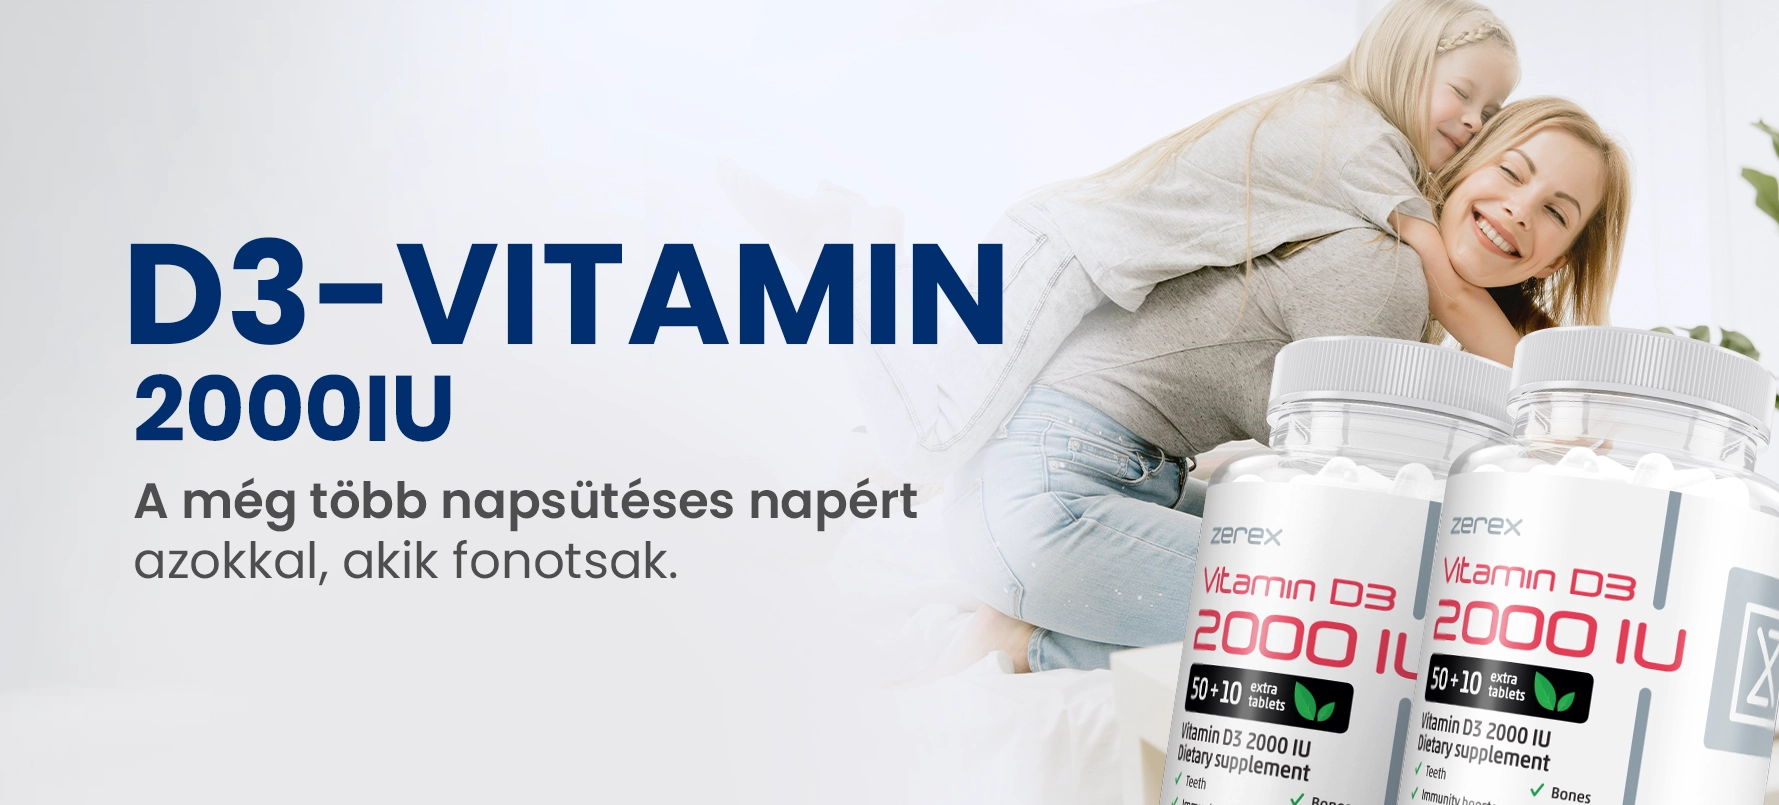 Zerex Vitamin D3 2000 IU